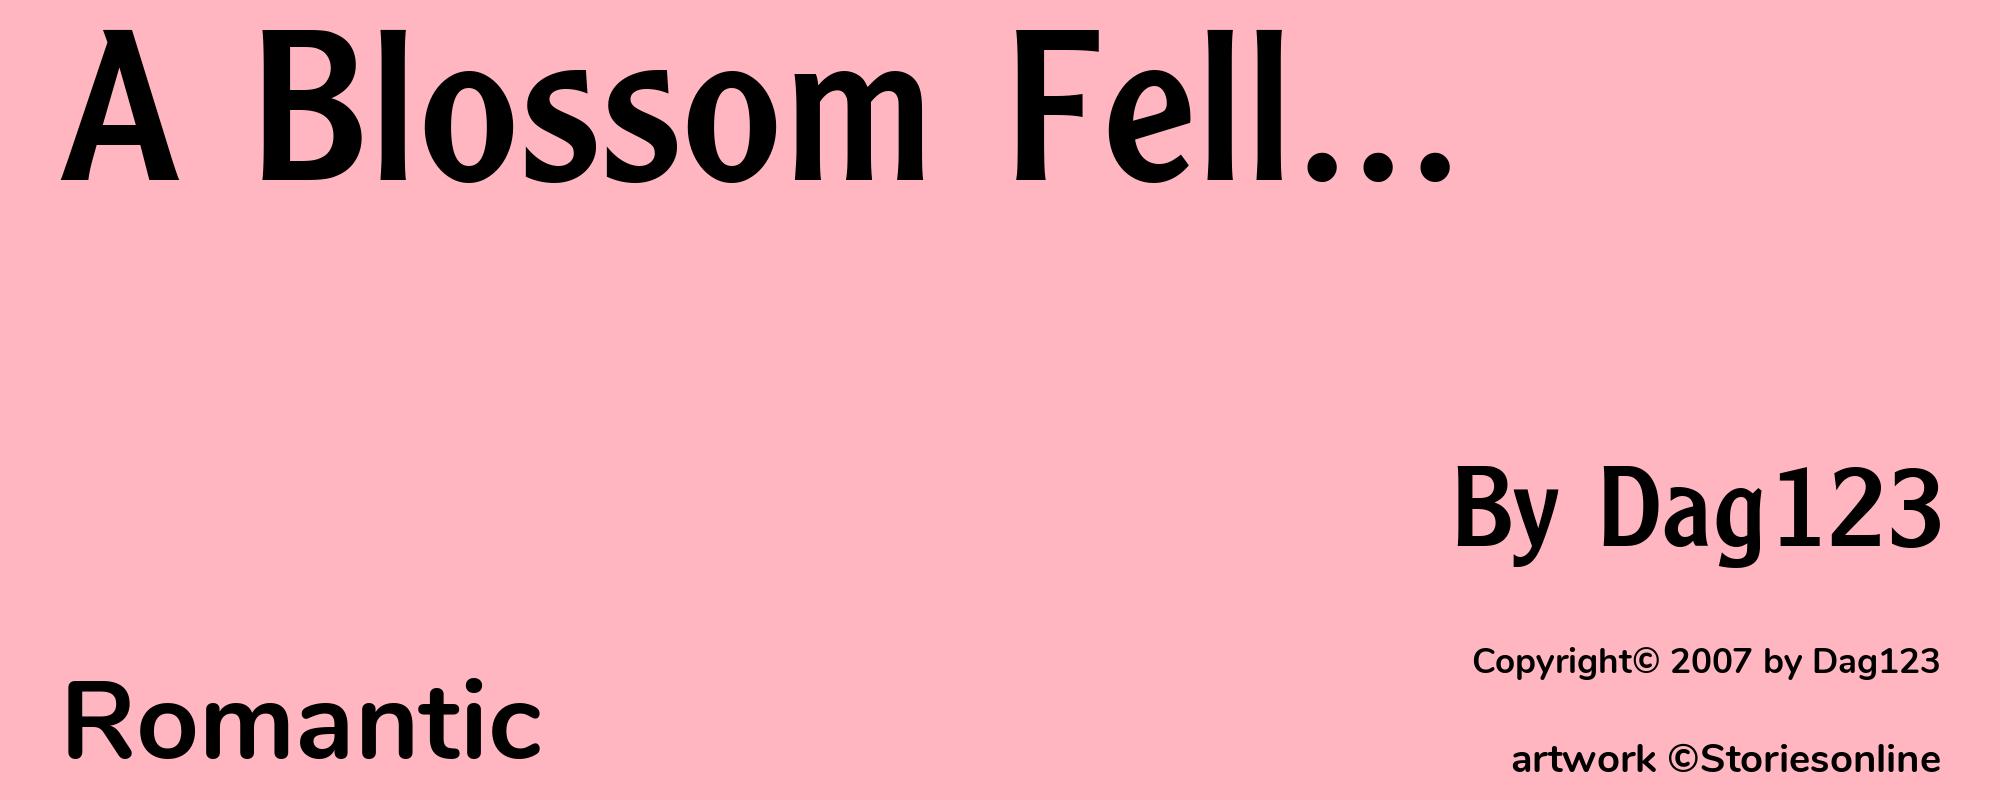 A Blossom Fell... - Cover